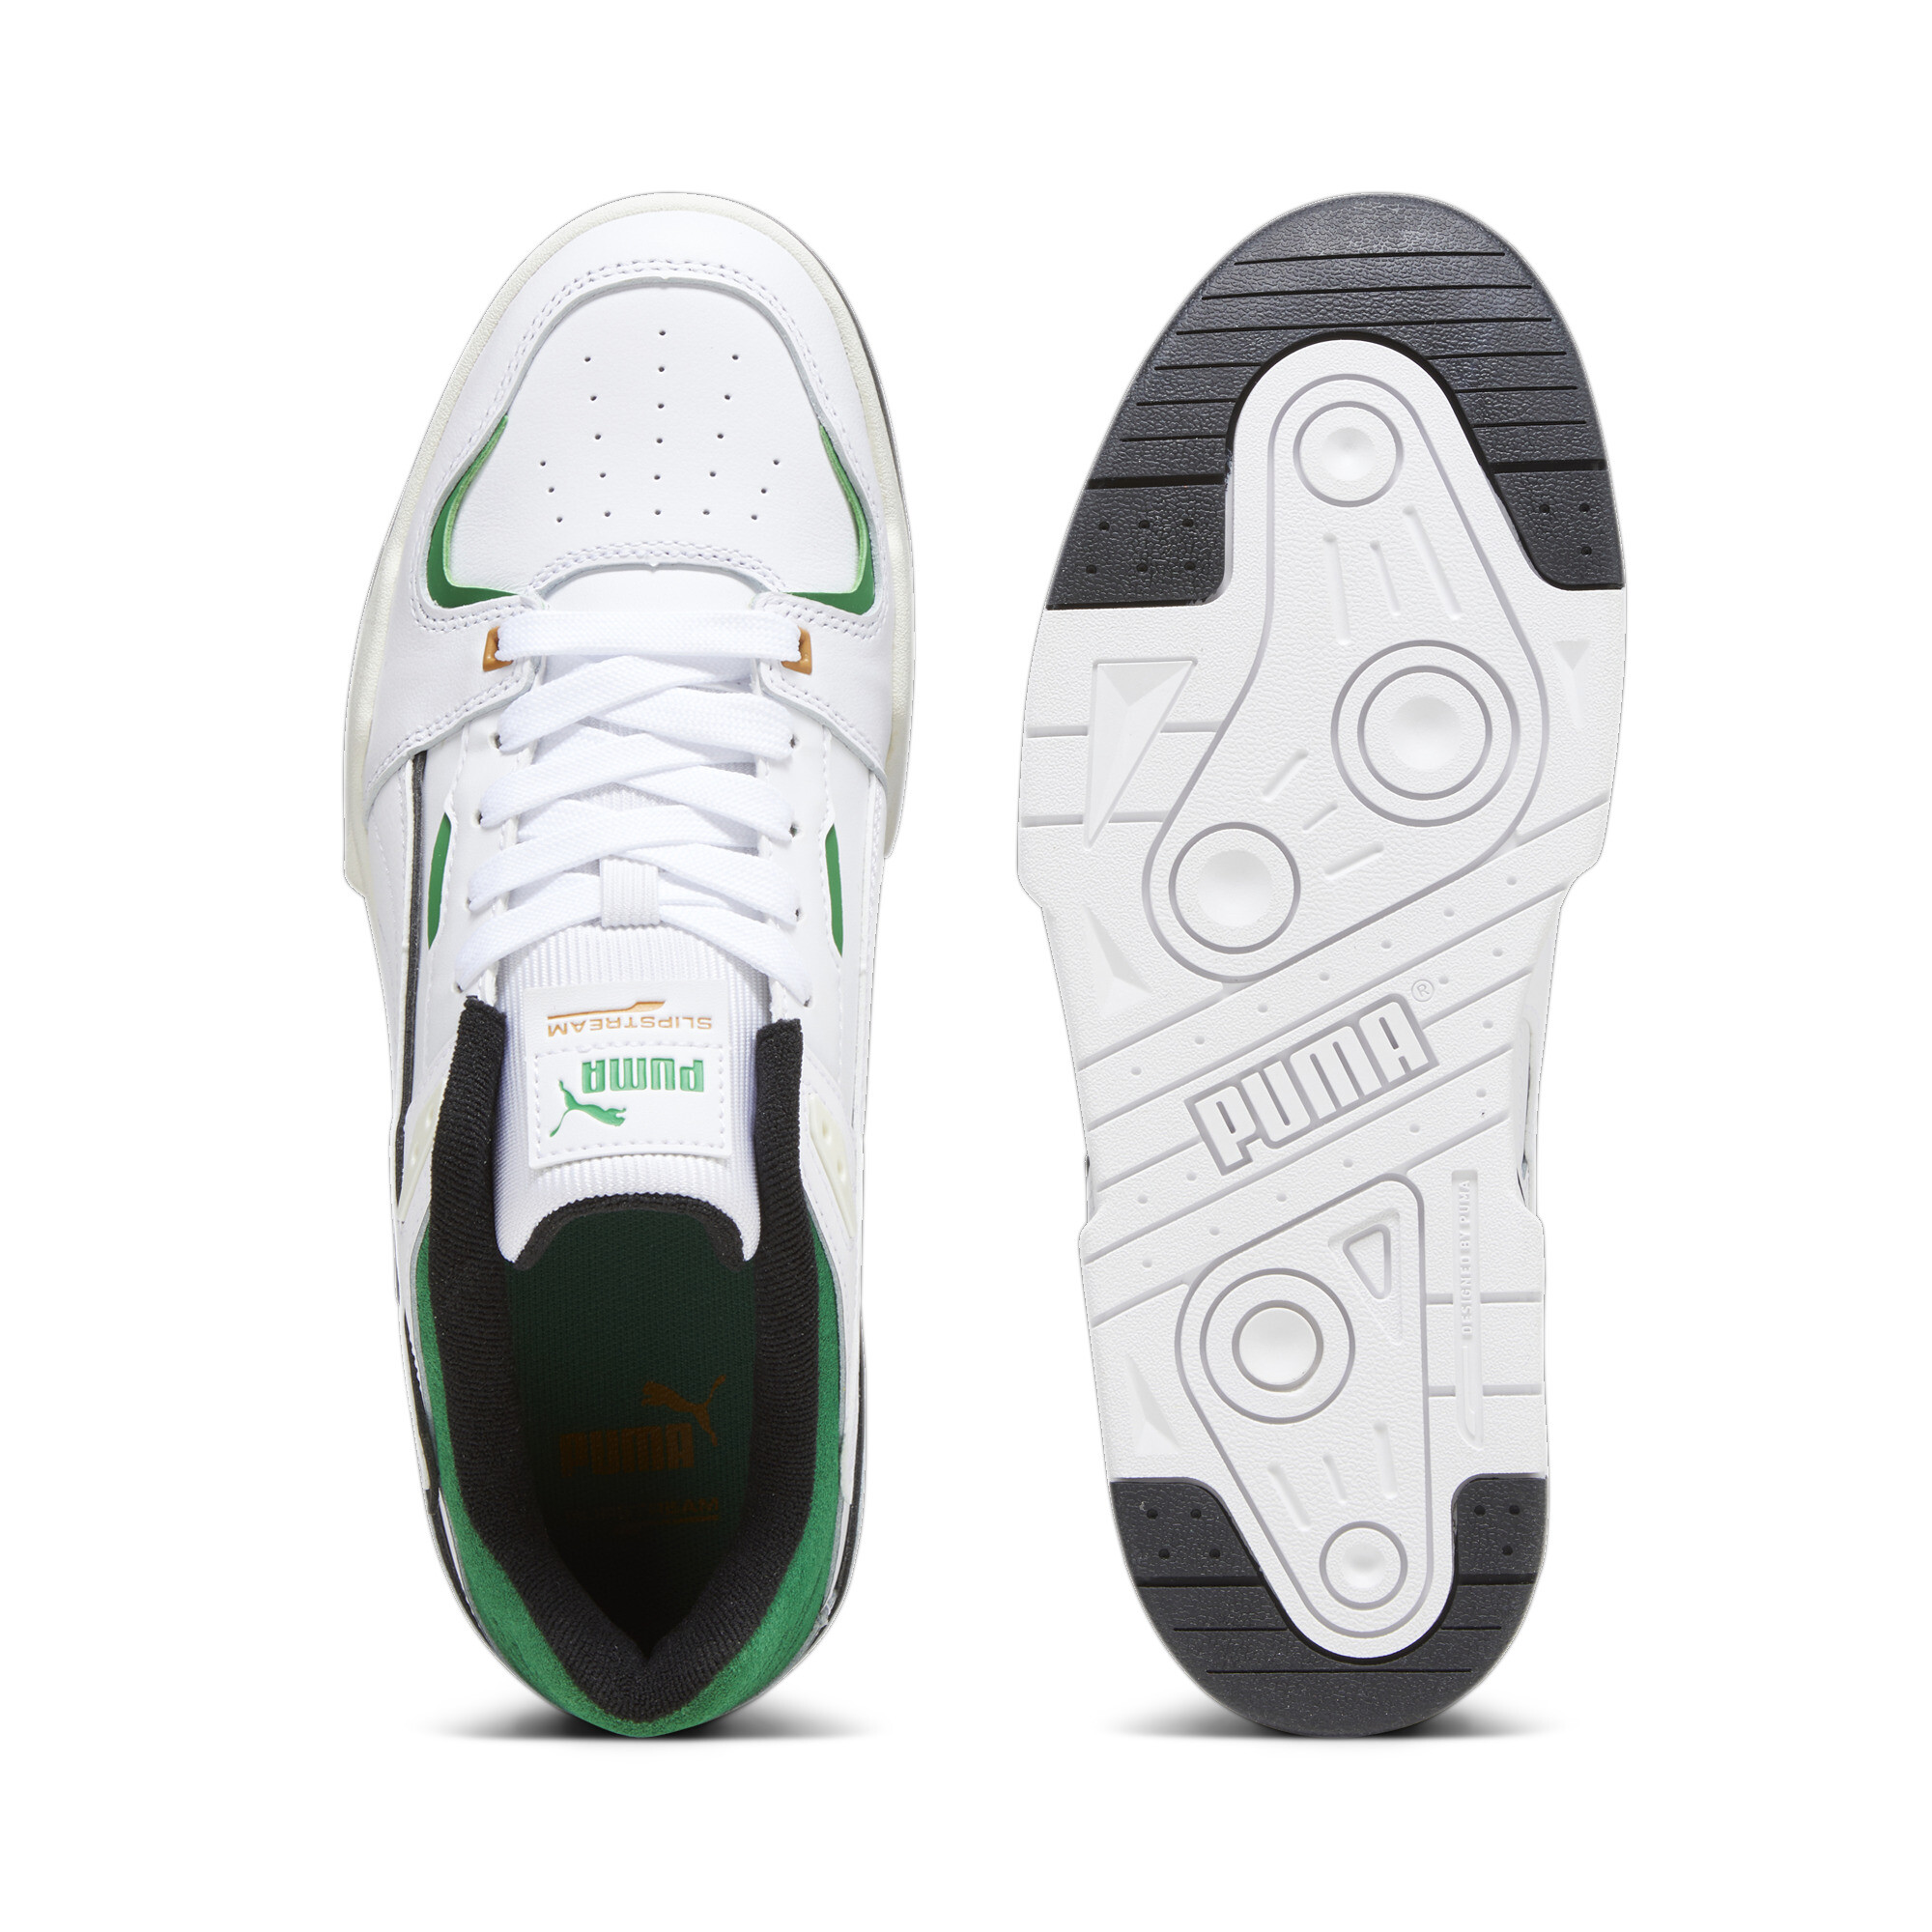 Men's PUMA Slipstream Bball Sneakers In 20 - White, Size EU 42.5